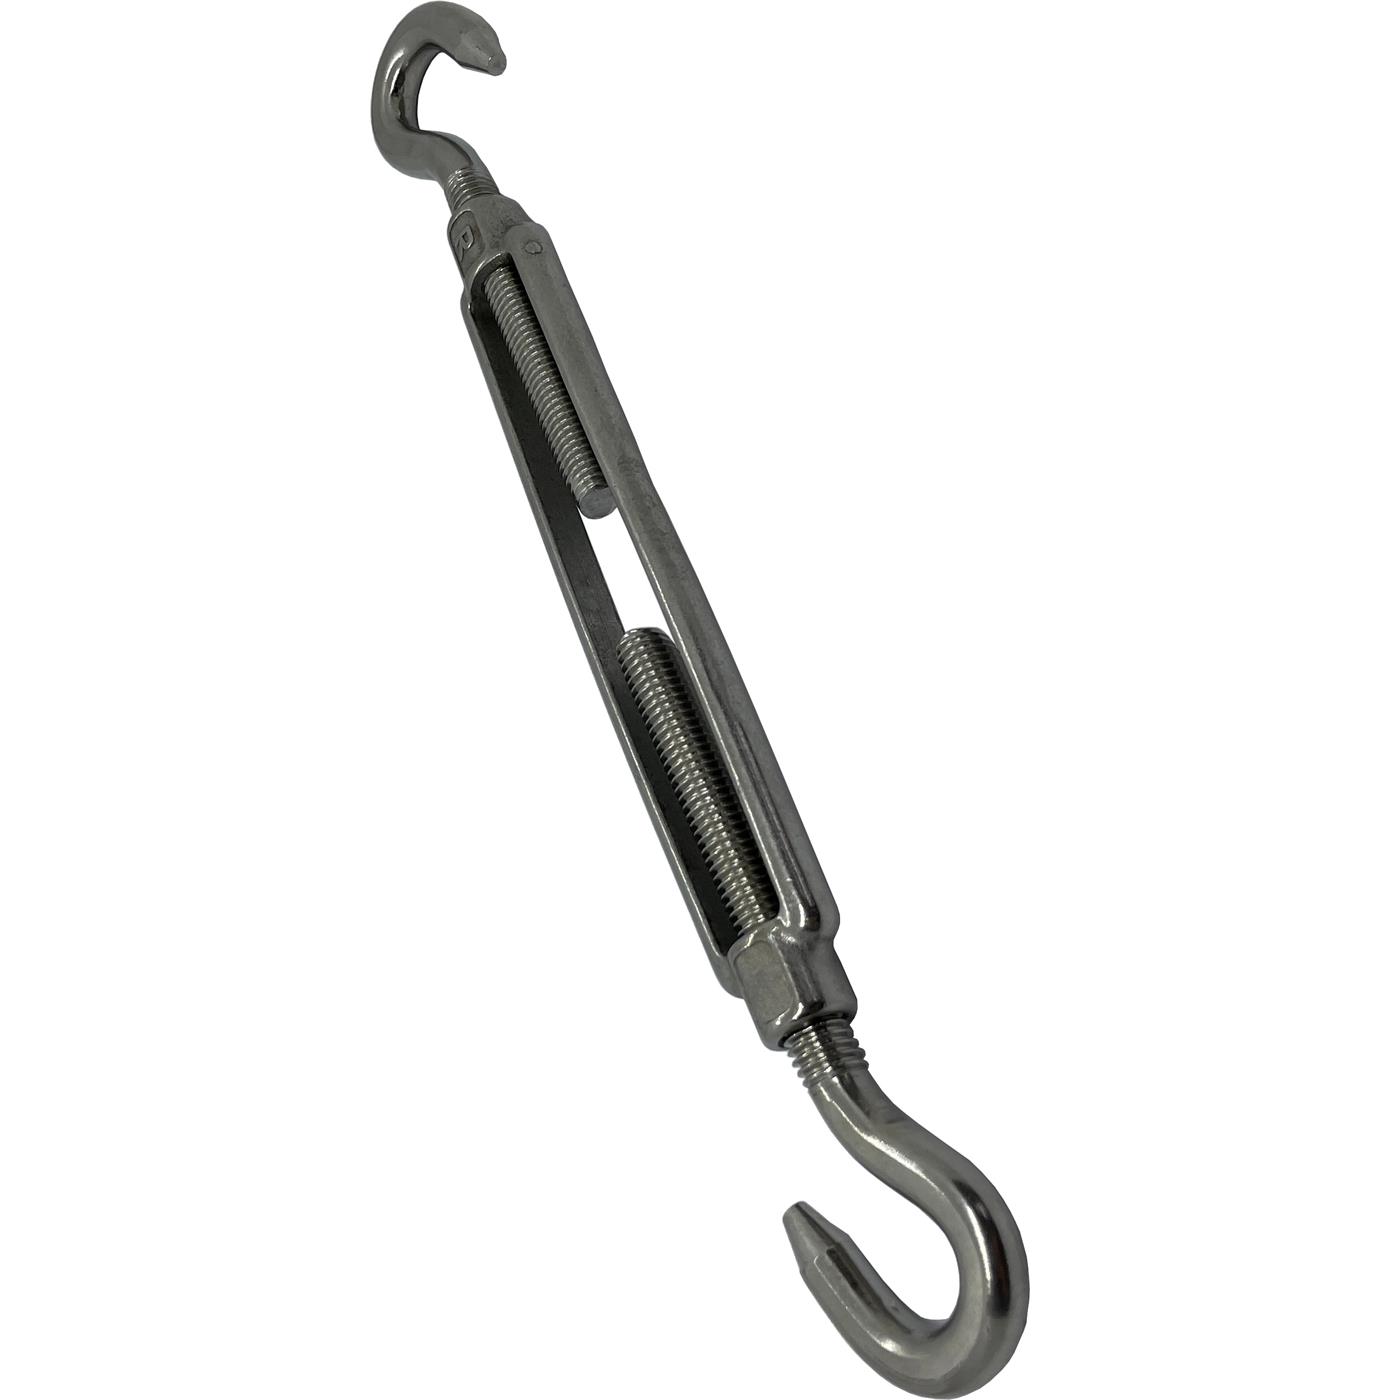 Rope tensioner Hook-Hook Stainless steel V4A 316 M8 Turnbuckle Shroud clamp